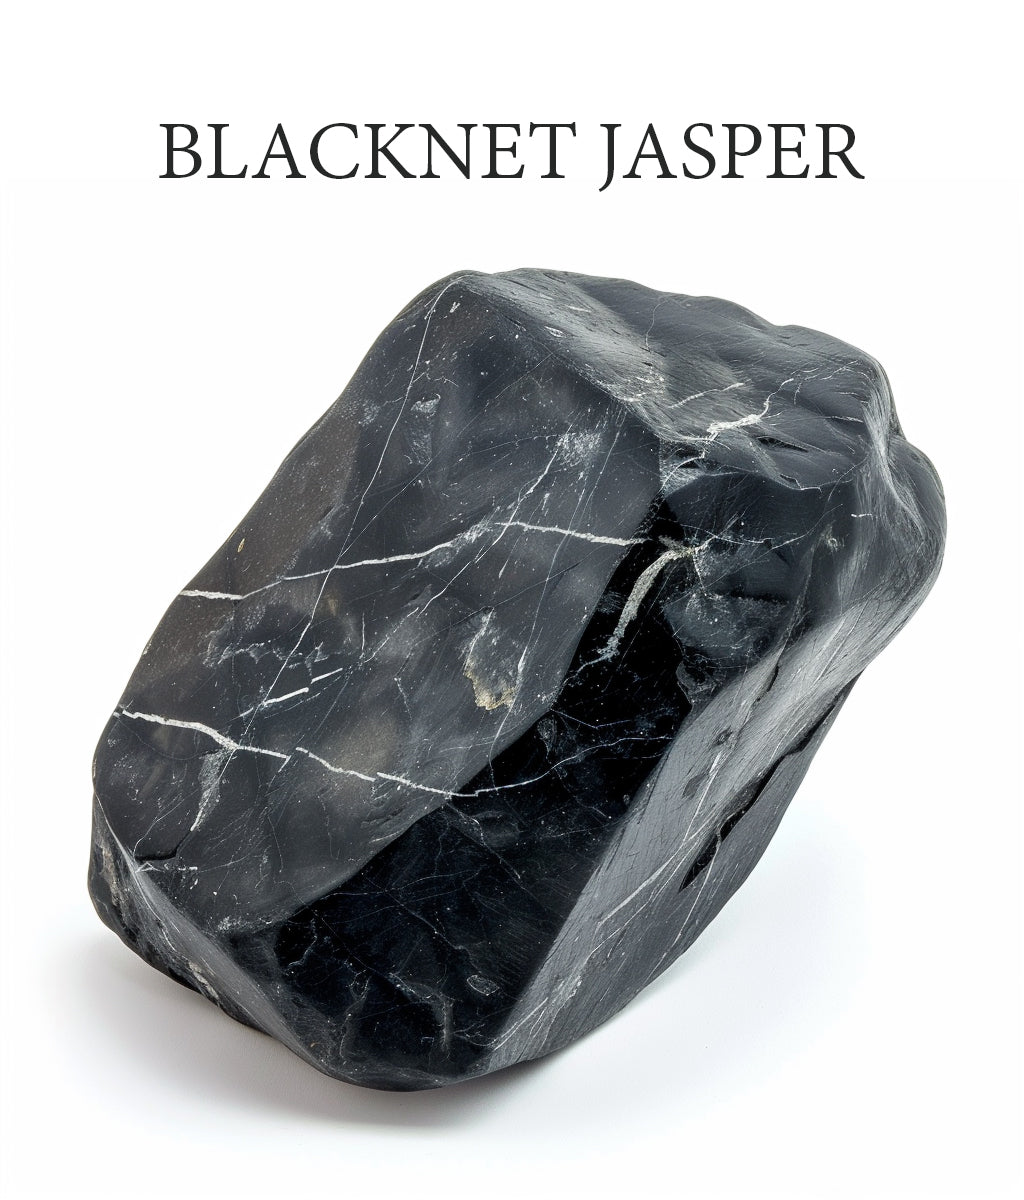 Blacknetjasper